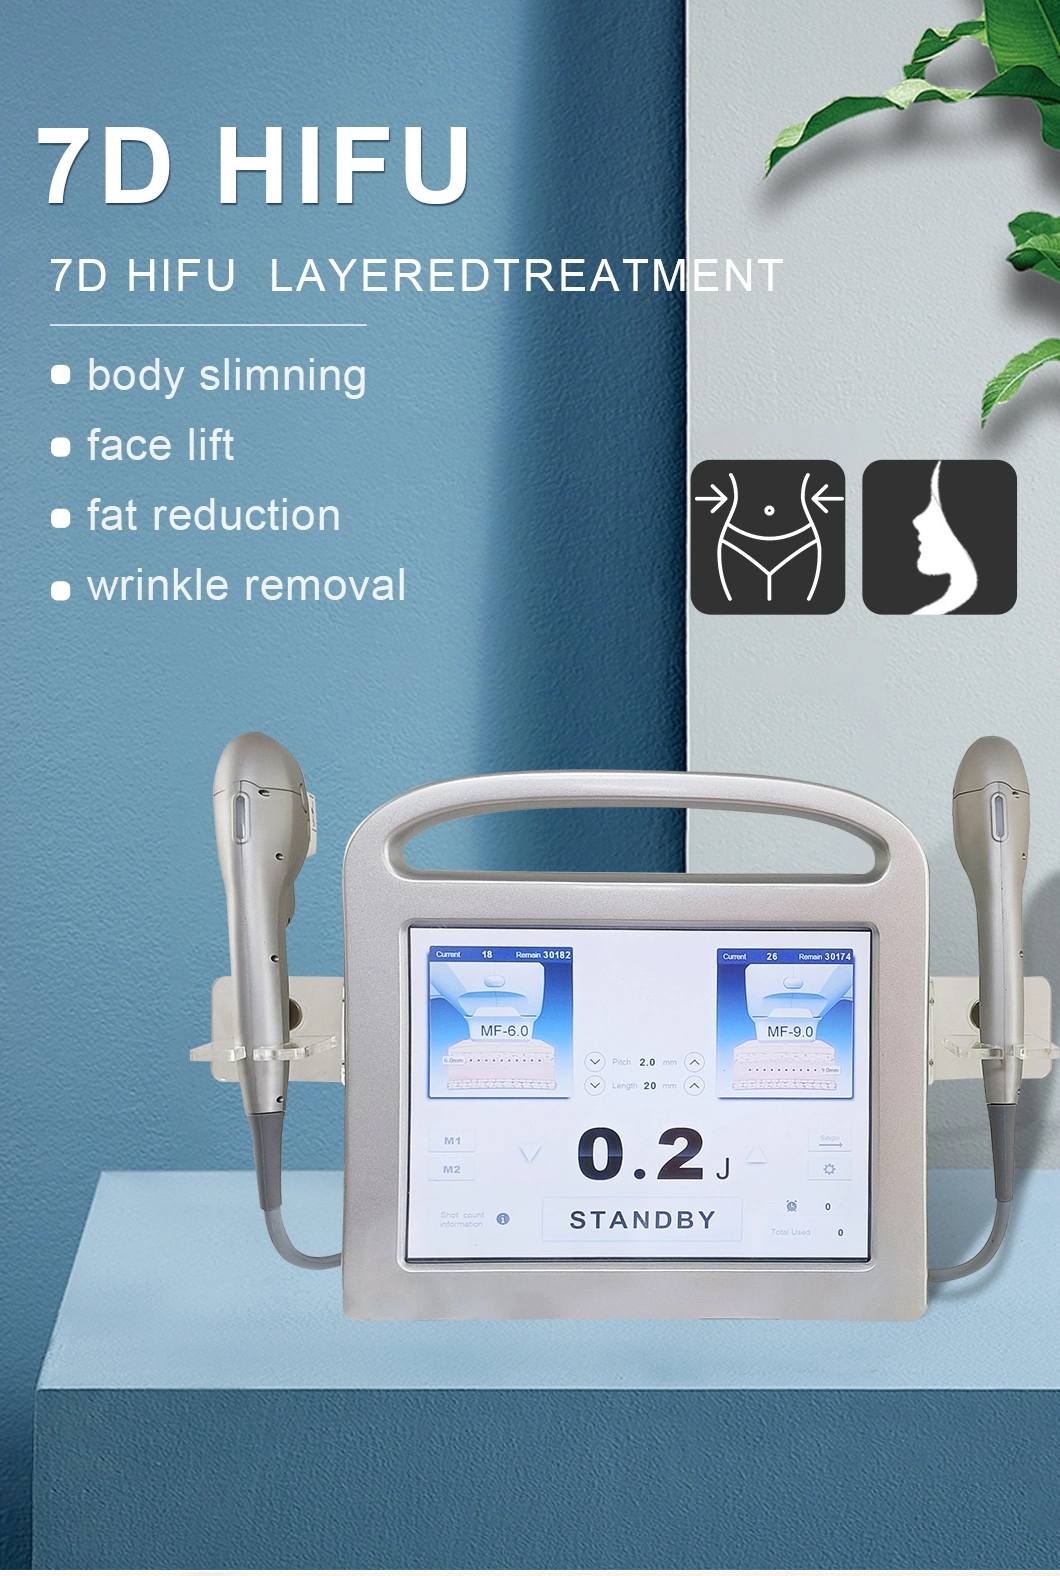 Body Slimming 7dhifu Portable 7 D Hifu Face Lifting Hifu (high intensity focused ultrasound) Machine Hifu 7D